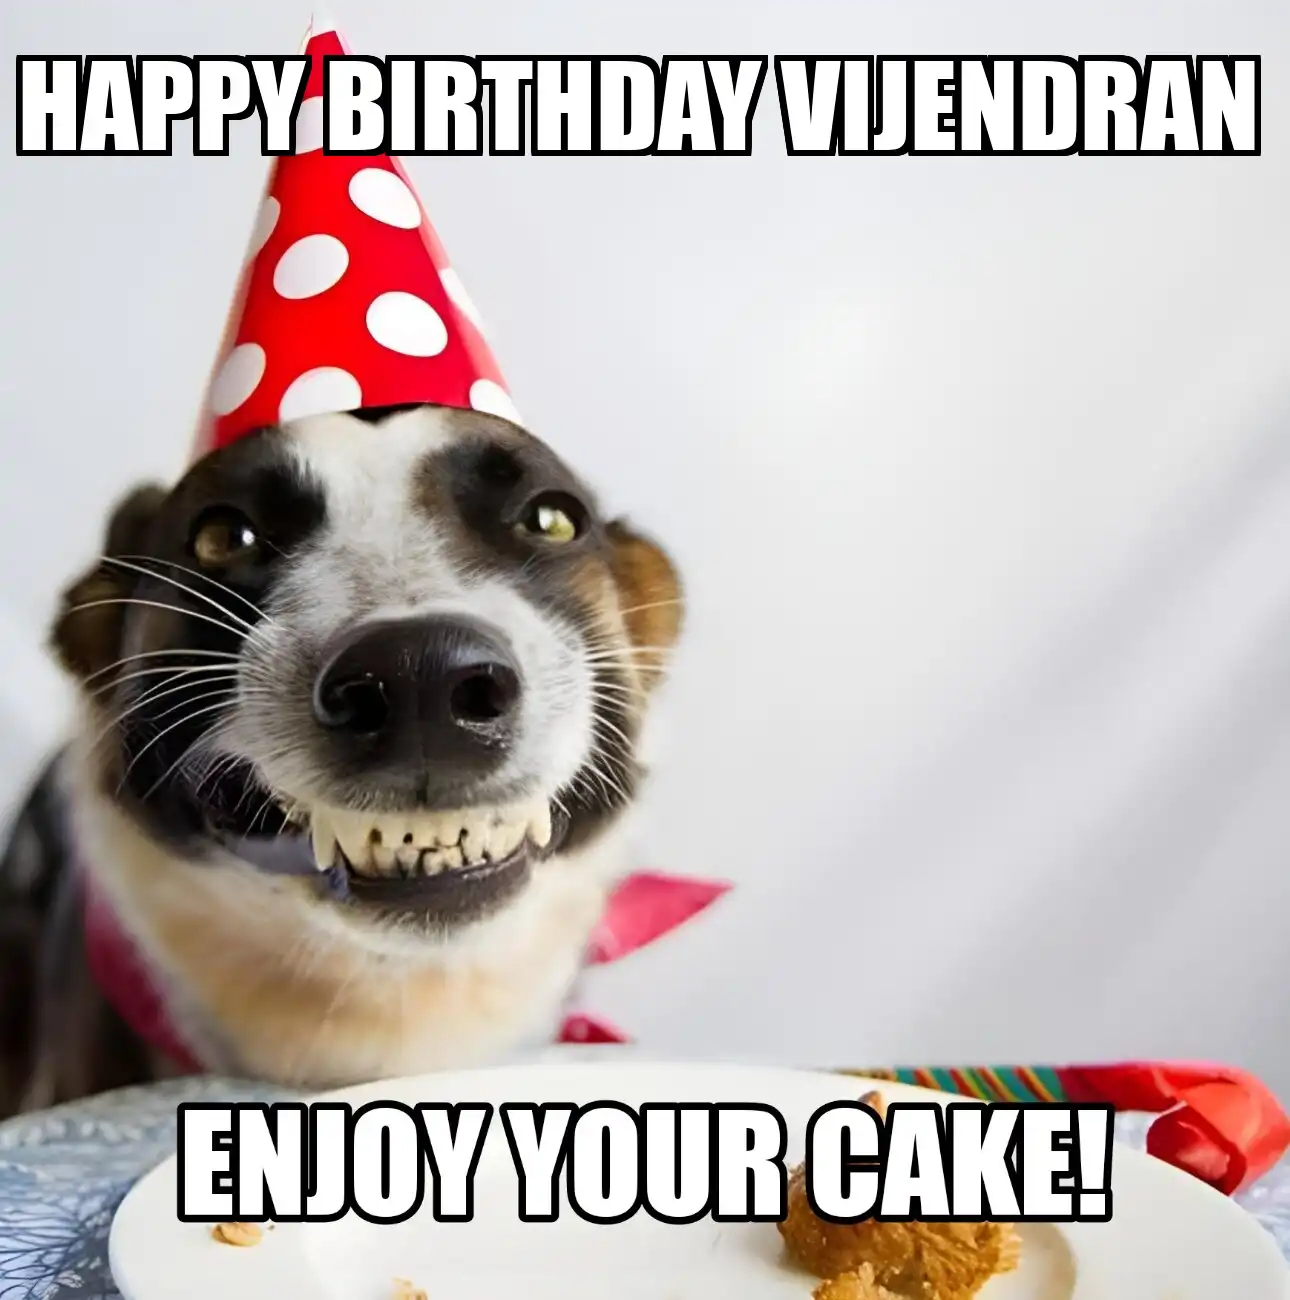 Happy Birthday Vijendran Enjoy Your Cake Dog Meme